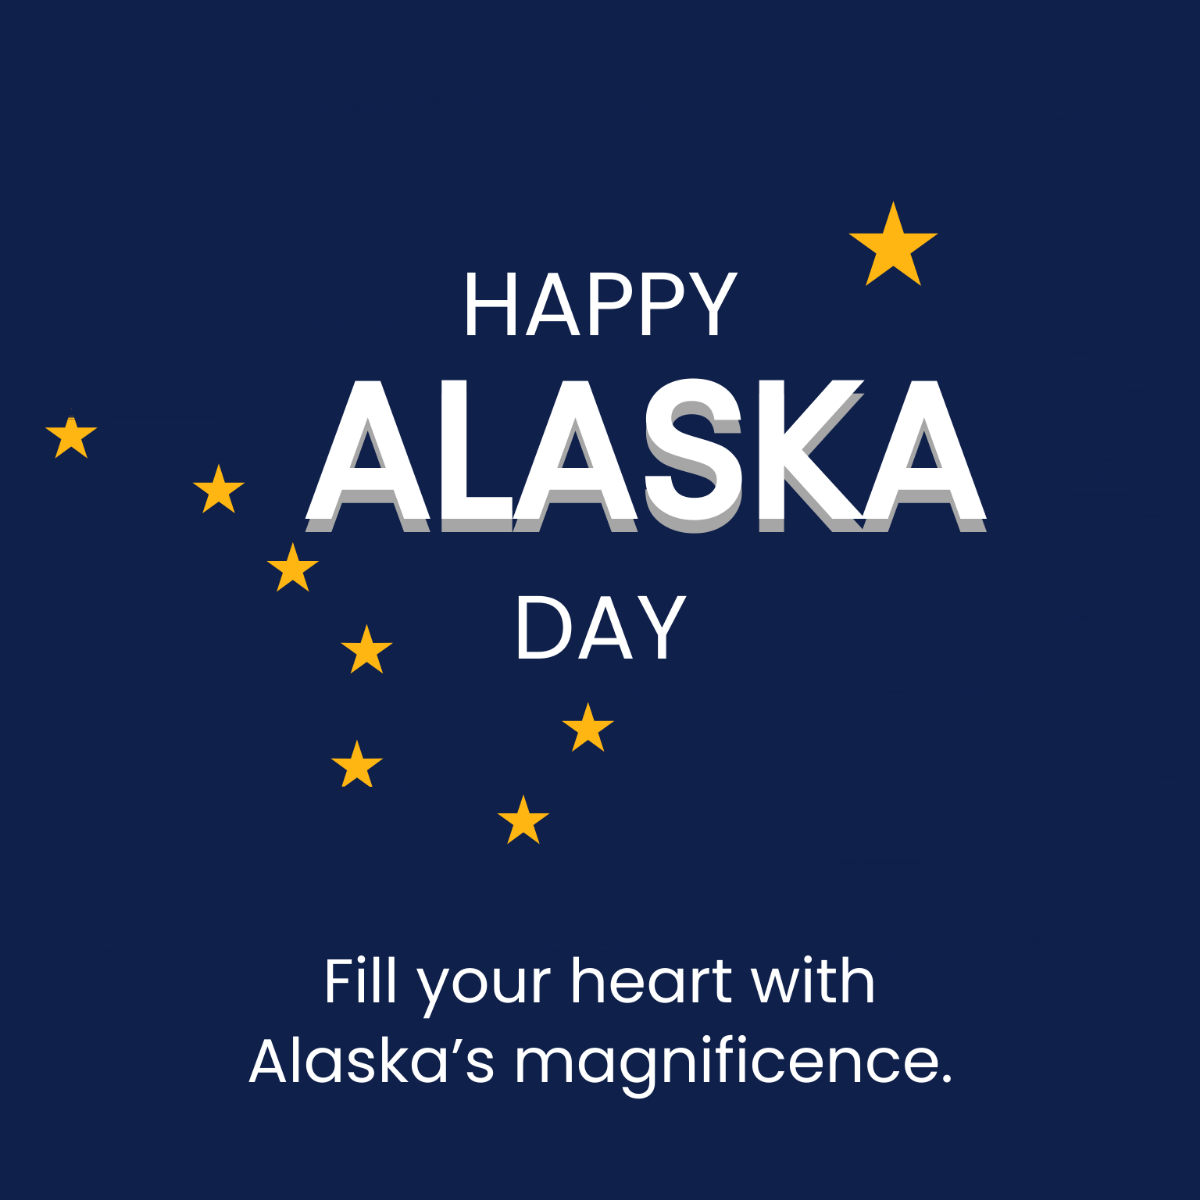 Alaska Day Greeting Card Vector